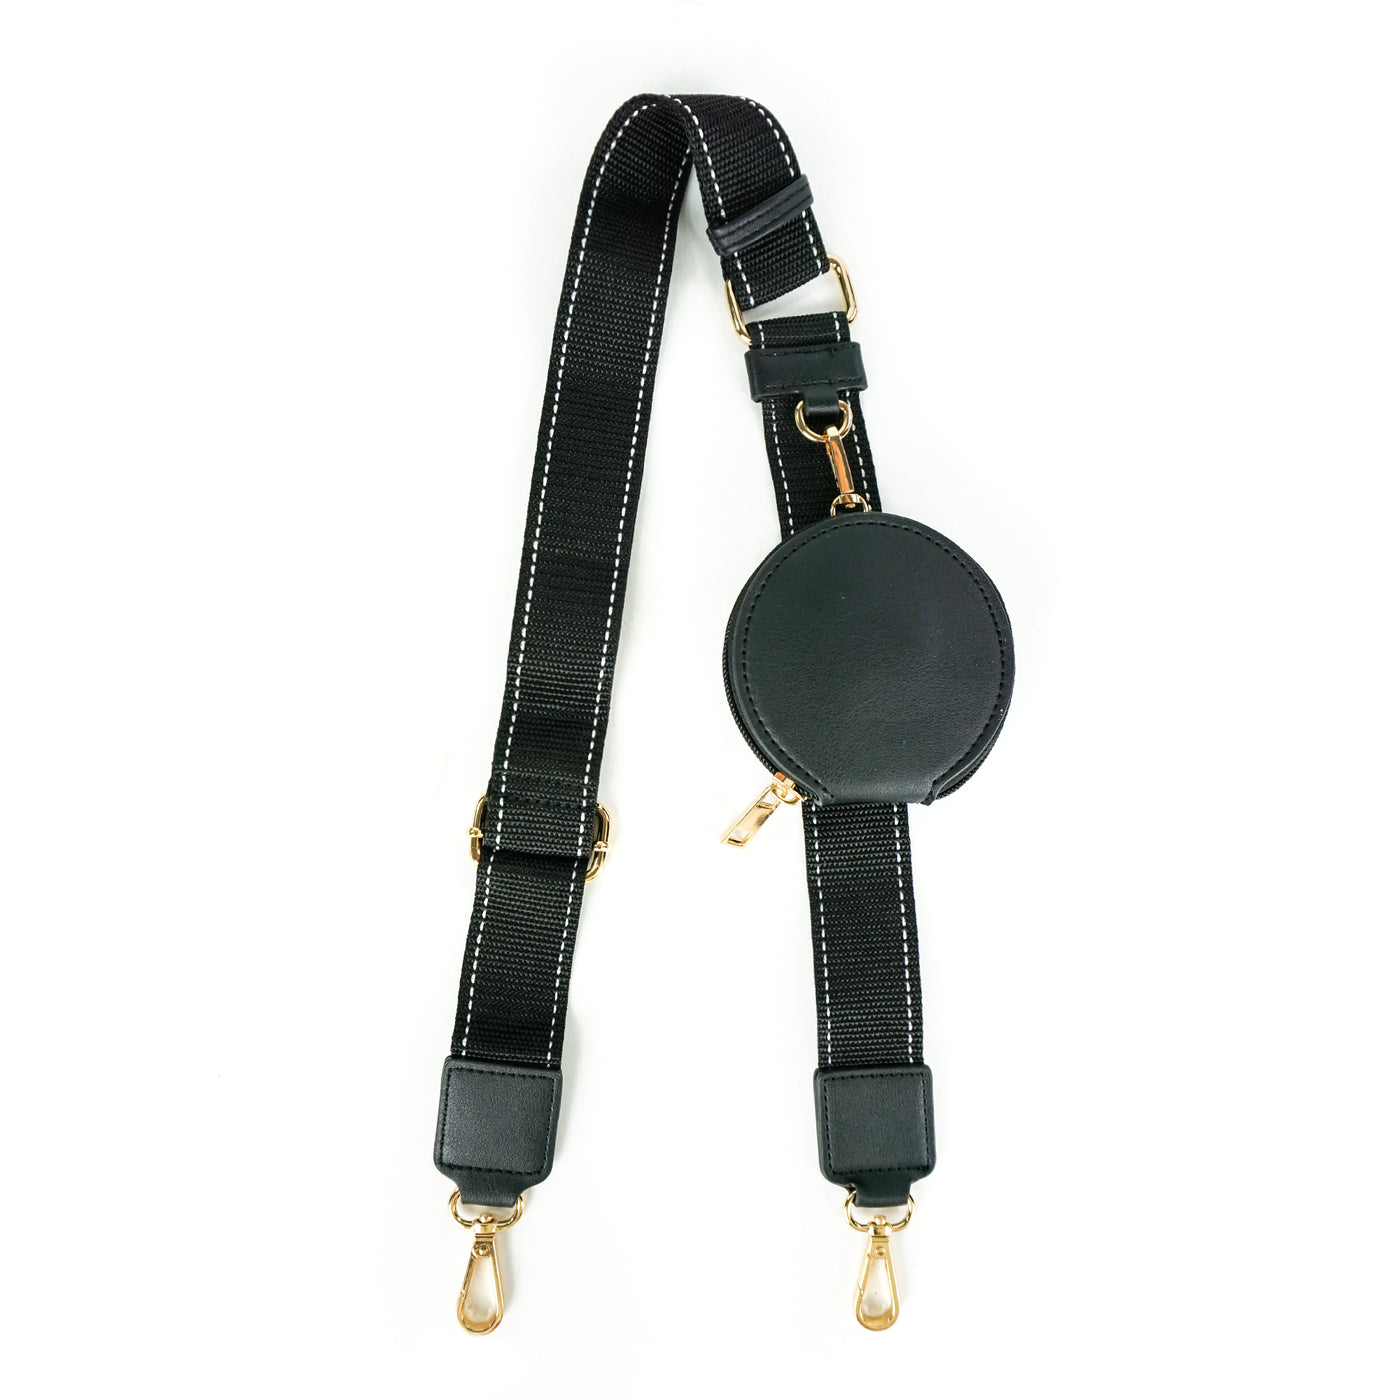 Black & Tan Strap for Bags - 1.5 Wide Nylon - Adjustable Length